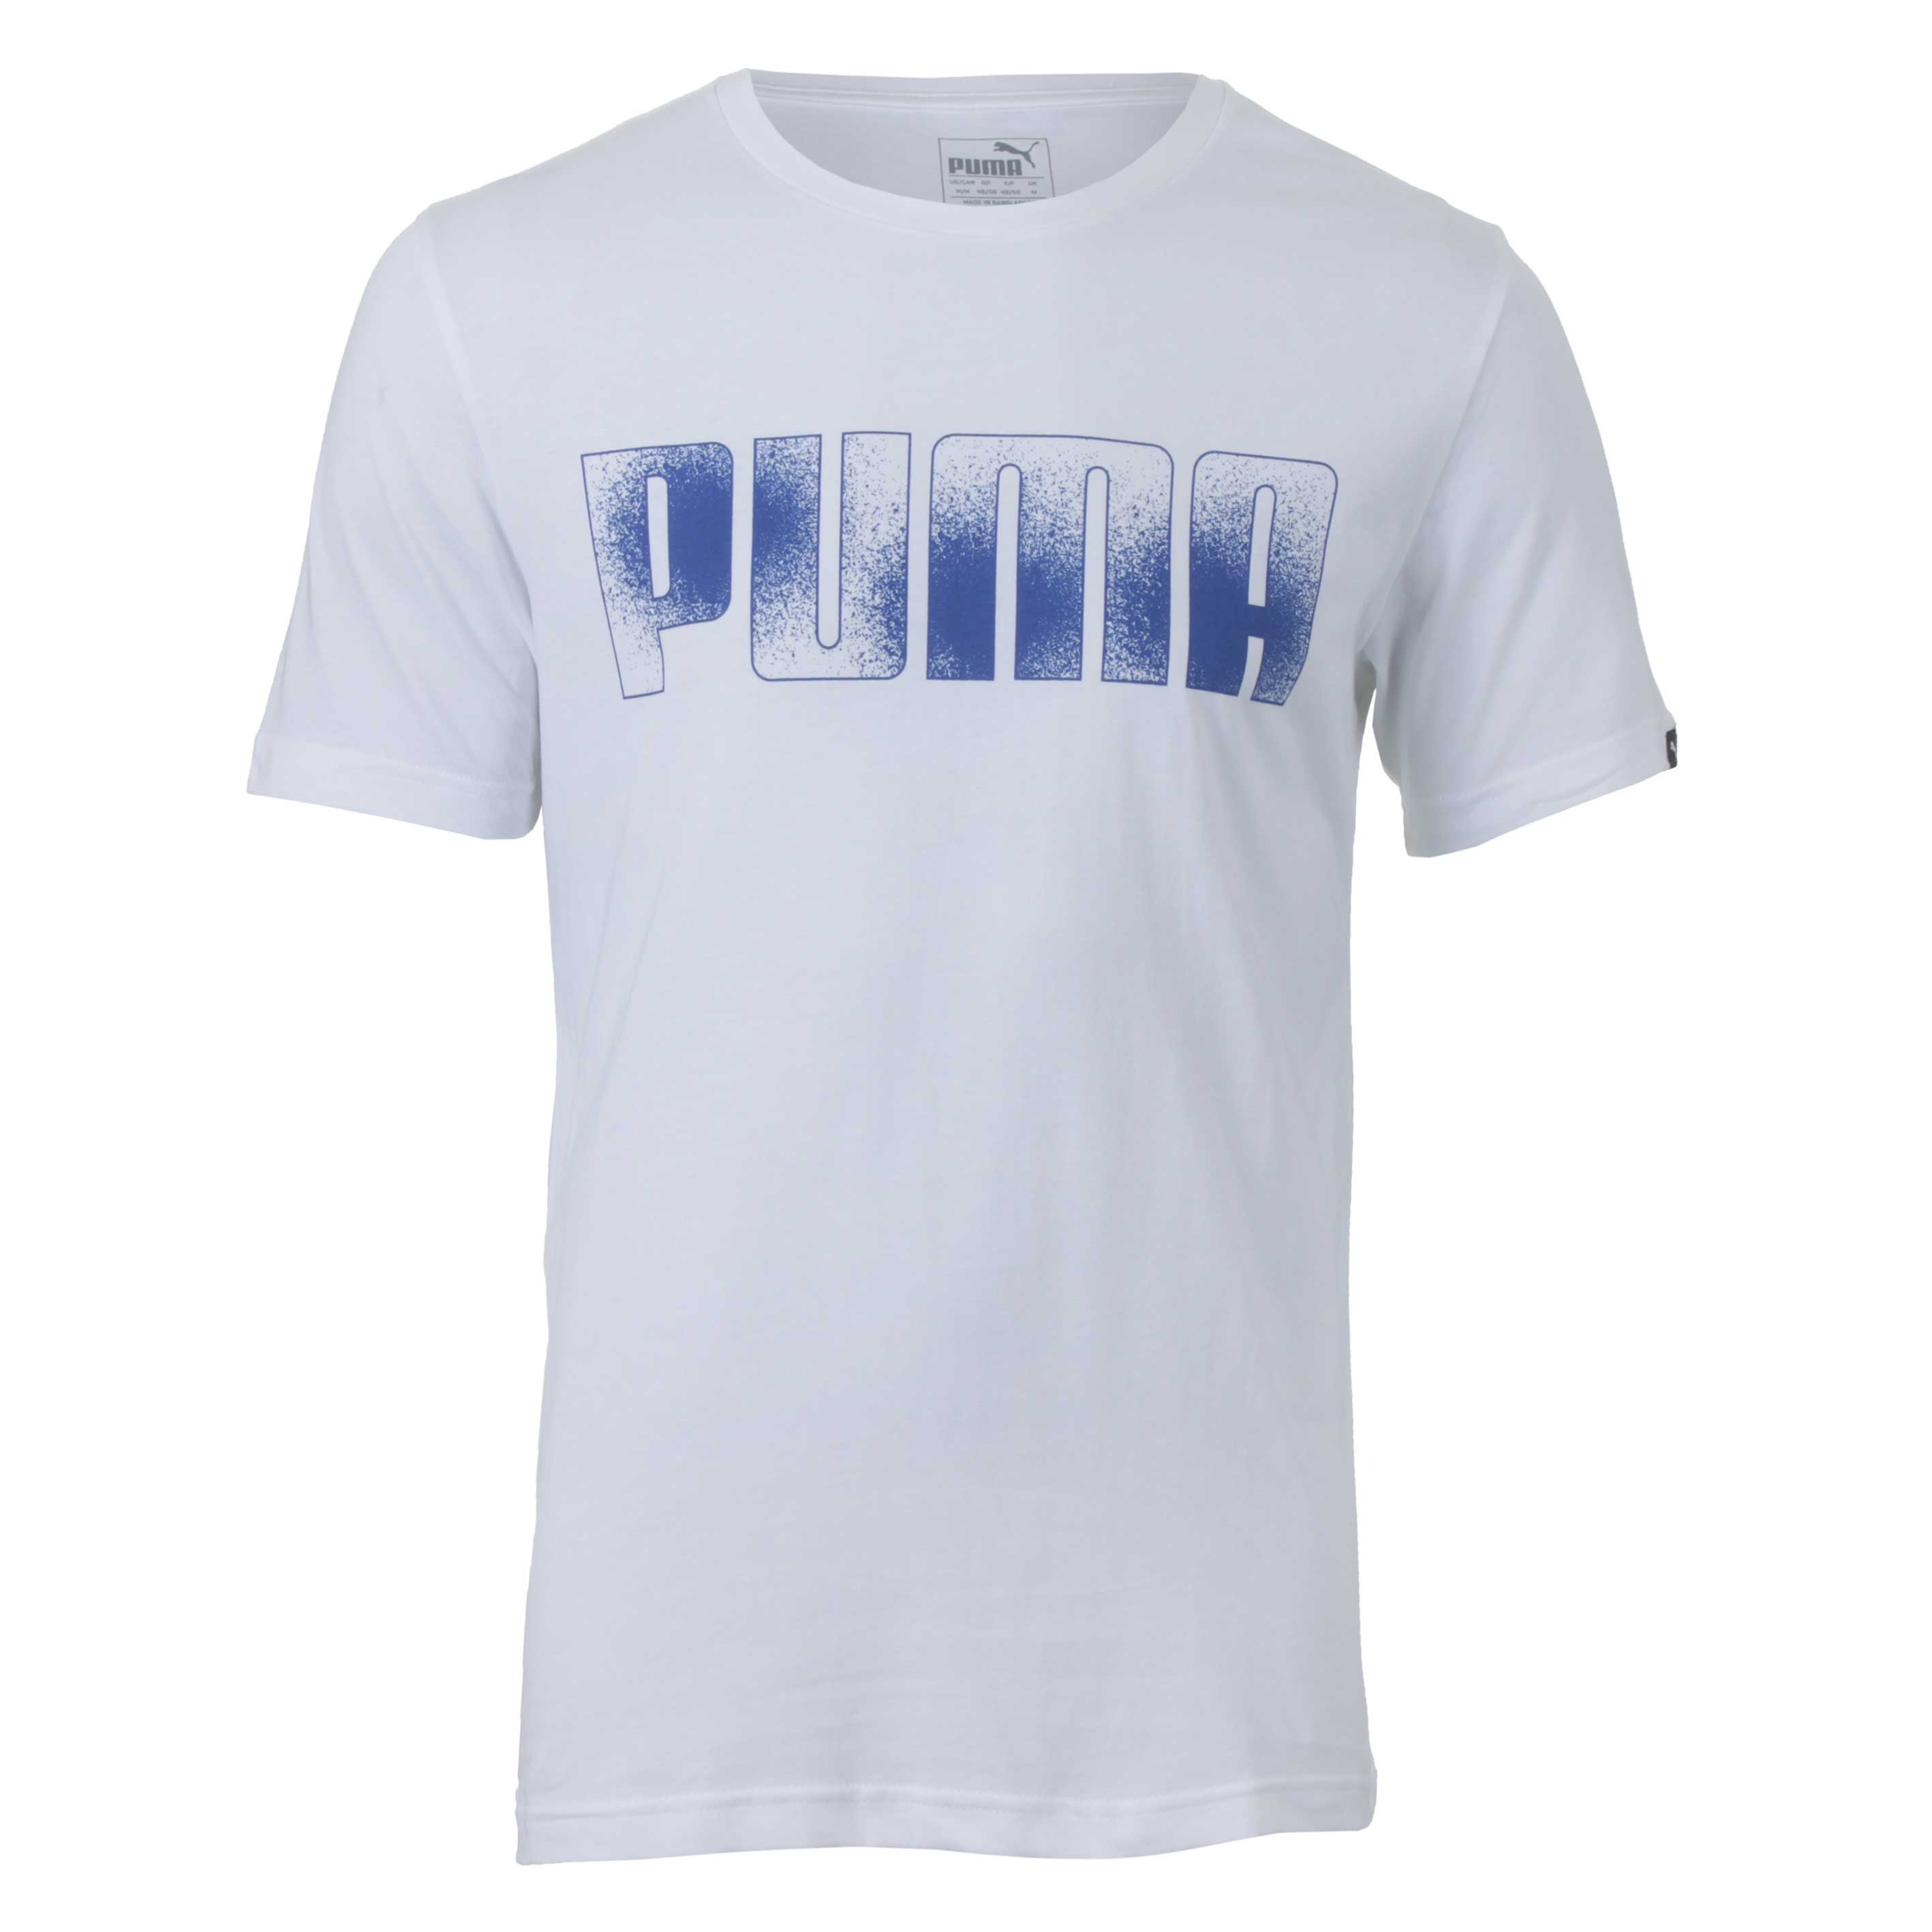 Camiseta Masc. Puma Bread Tee - Branco/Azul